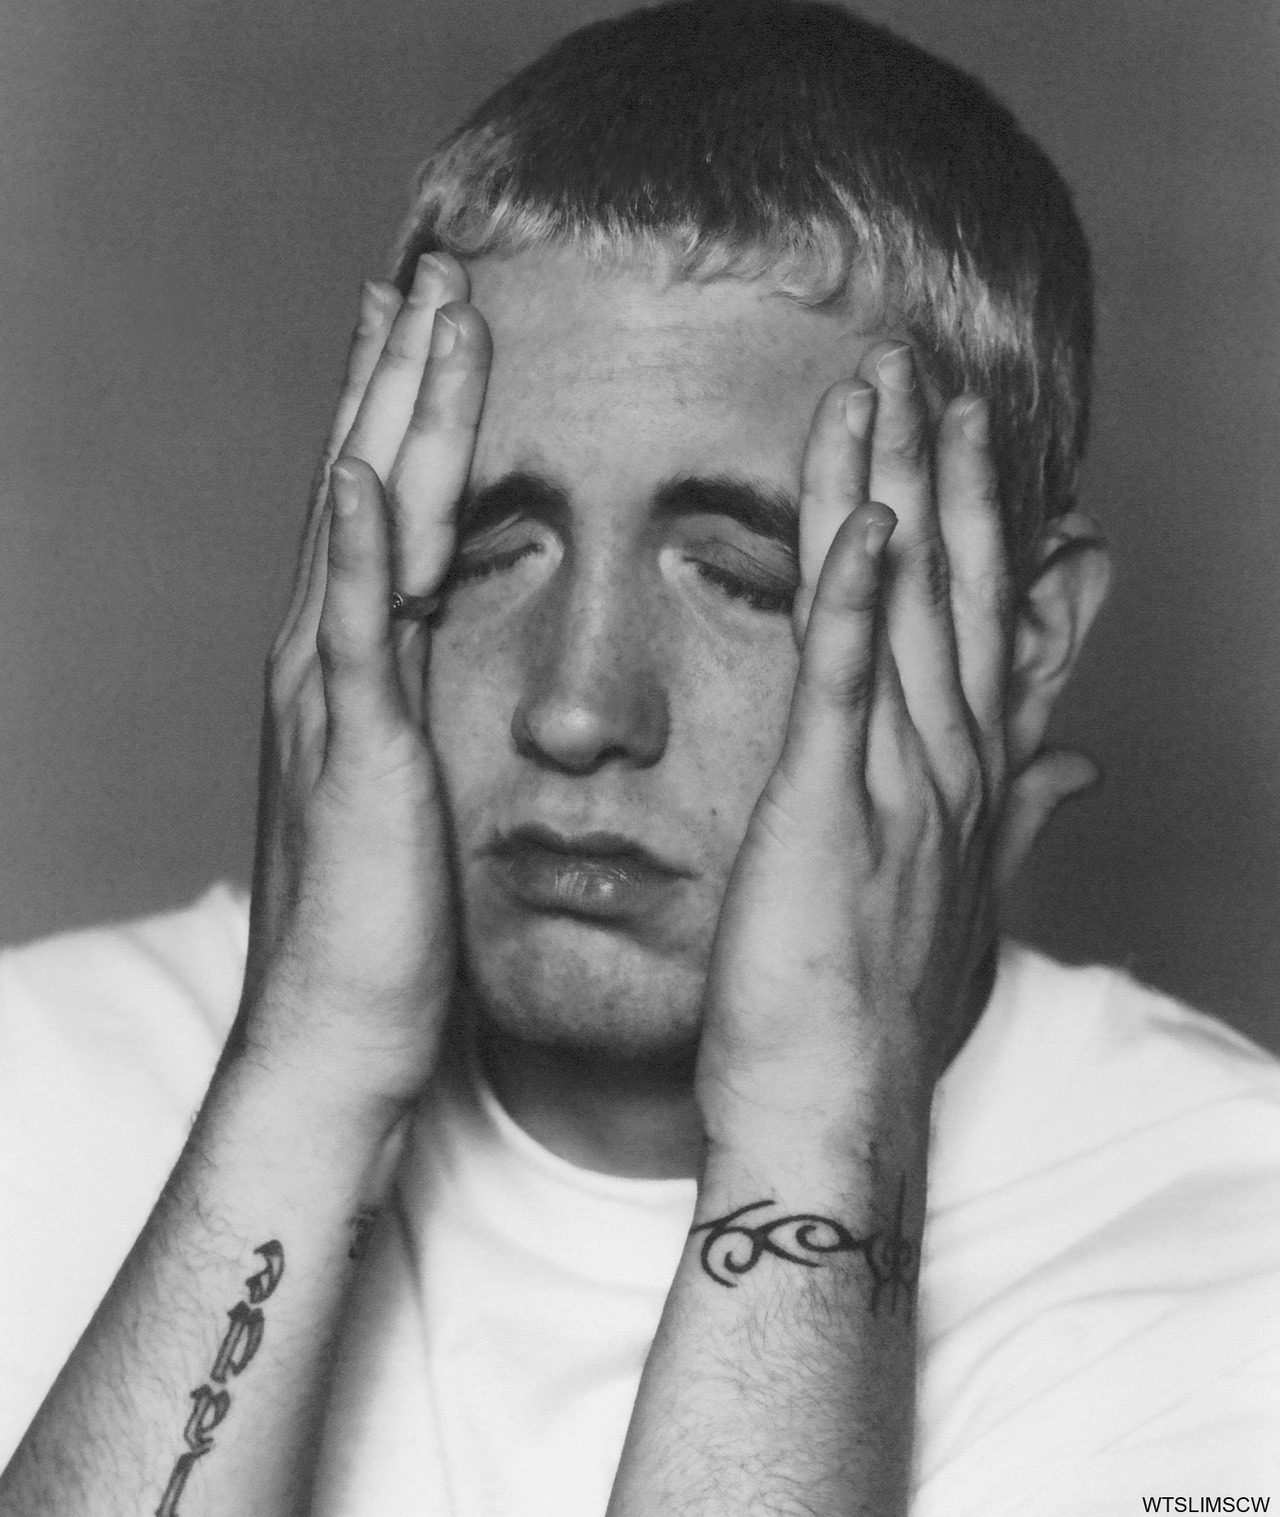 Eminem photo 56 of 142 pics, wallpaper - photo #561006 - ThePlace21280 x 1517